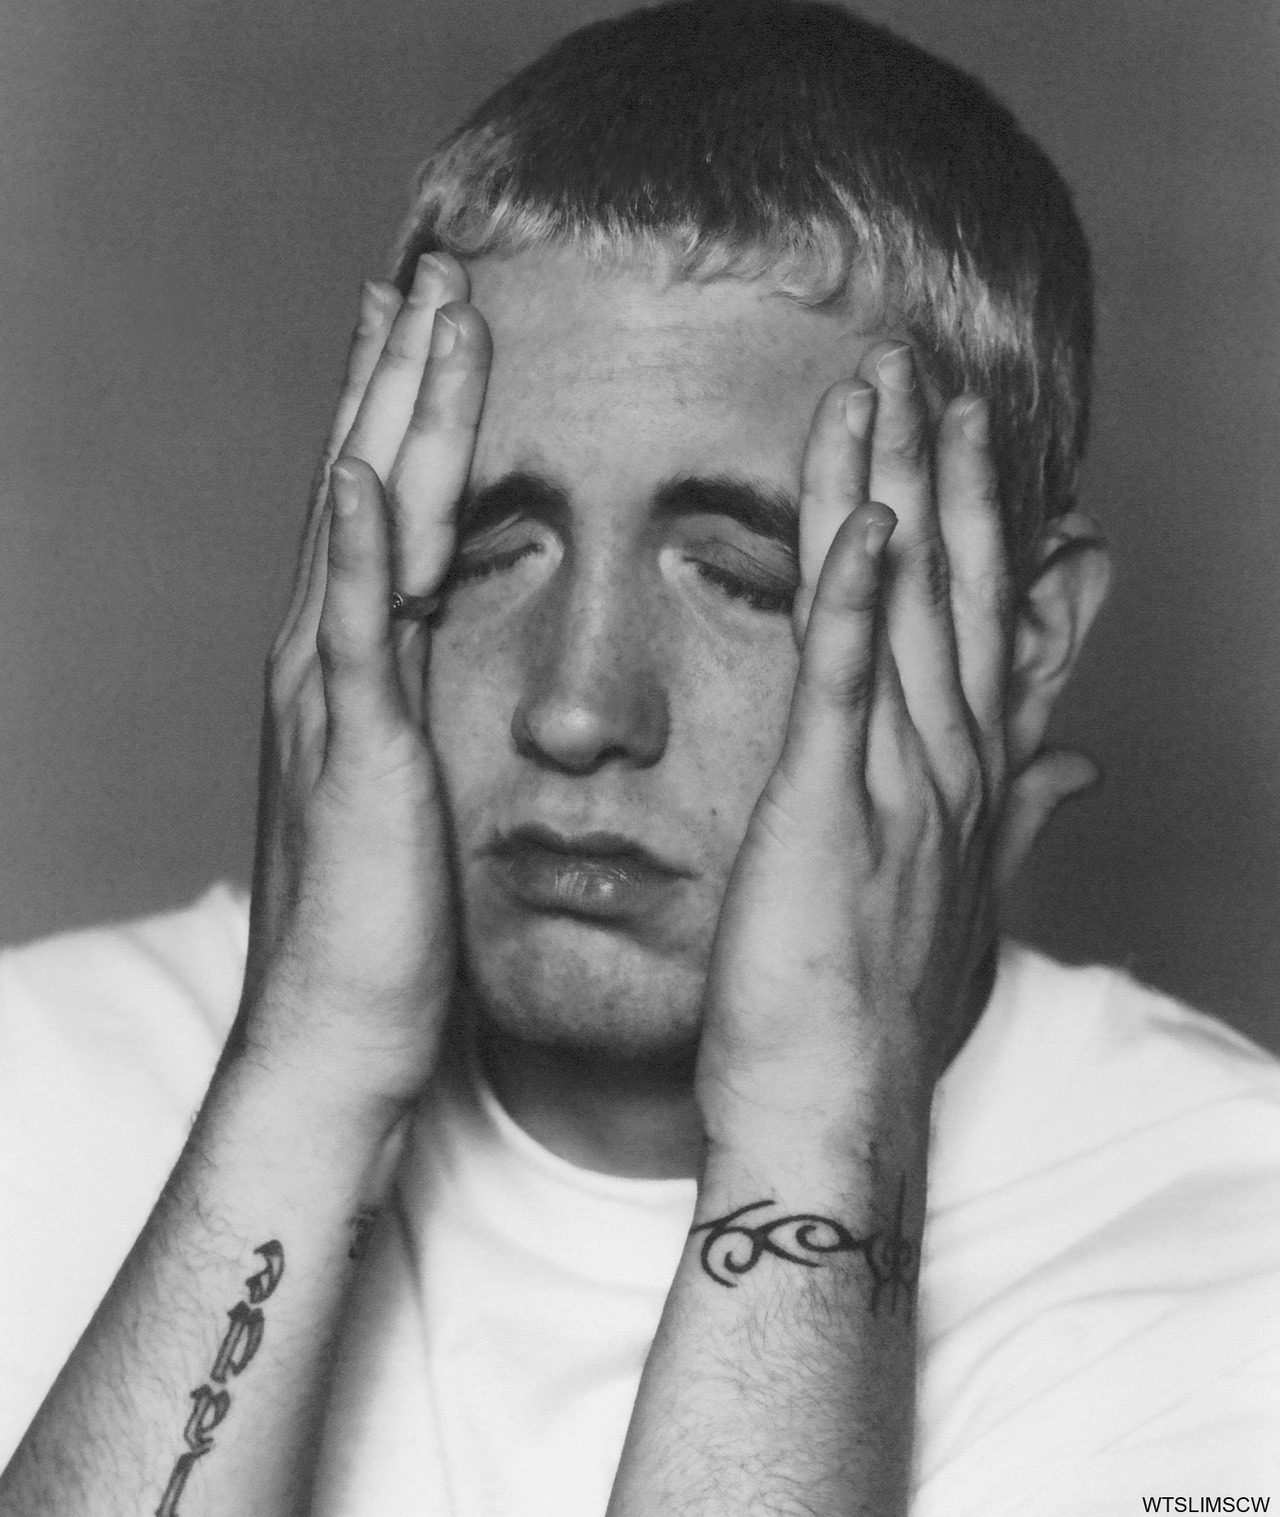 Eminem photo 56 of 142 pics, wallpaper - photo #561006 - ThePlace21280 x 1517